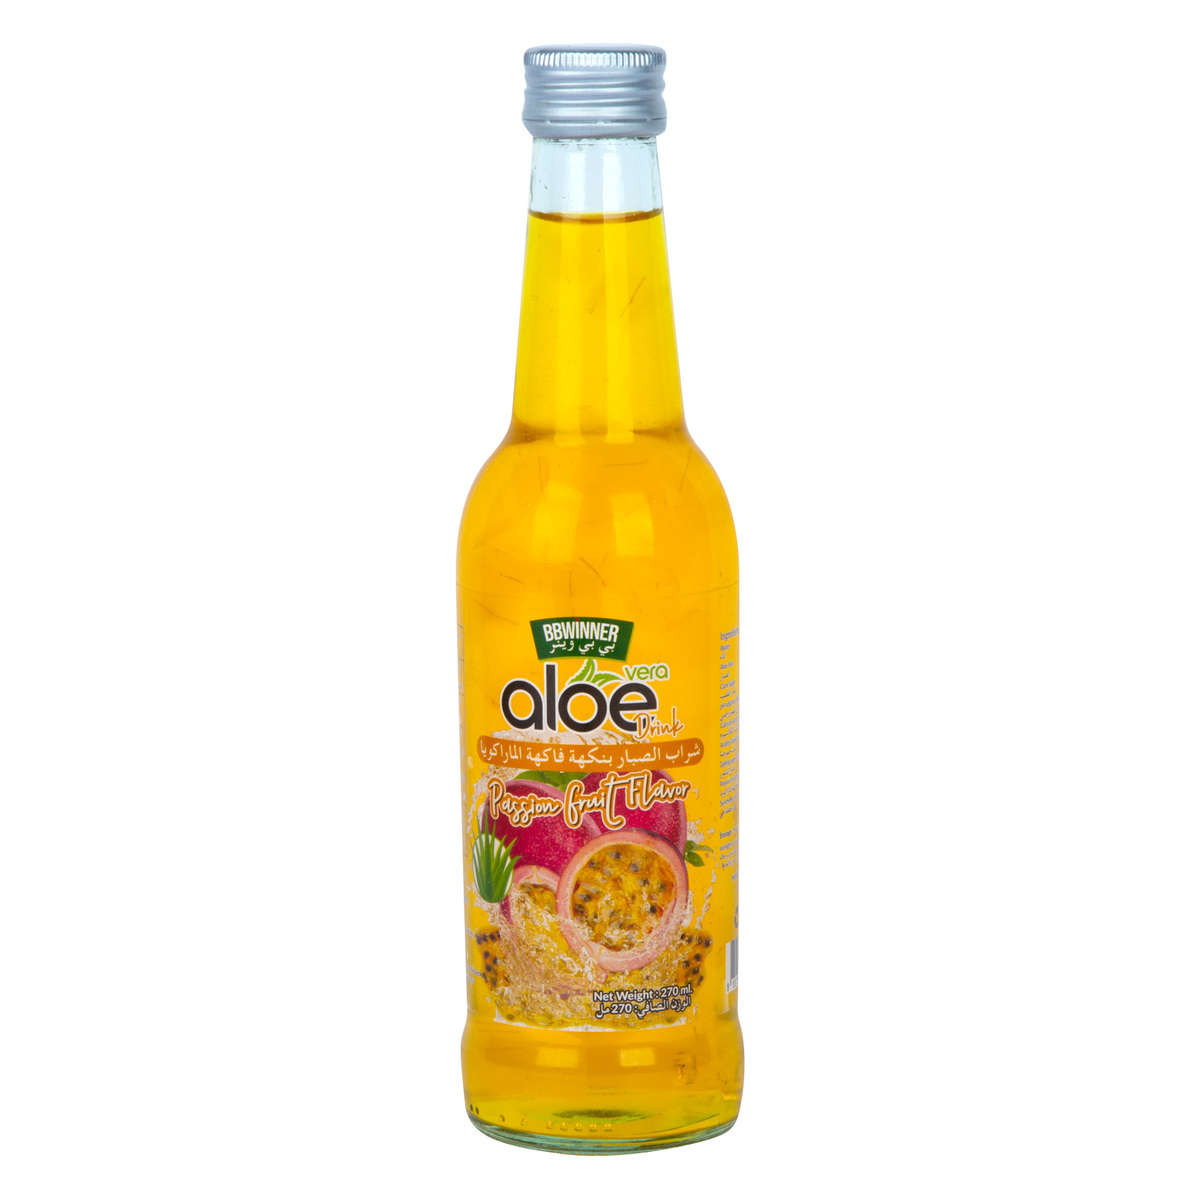 BB Winner Aloe Vera Drink Passion Fruit Flavour, 270 ml